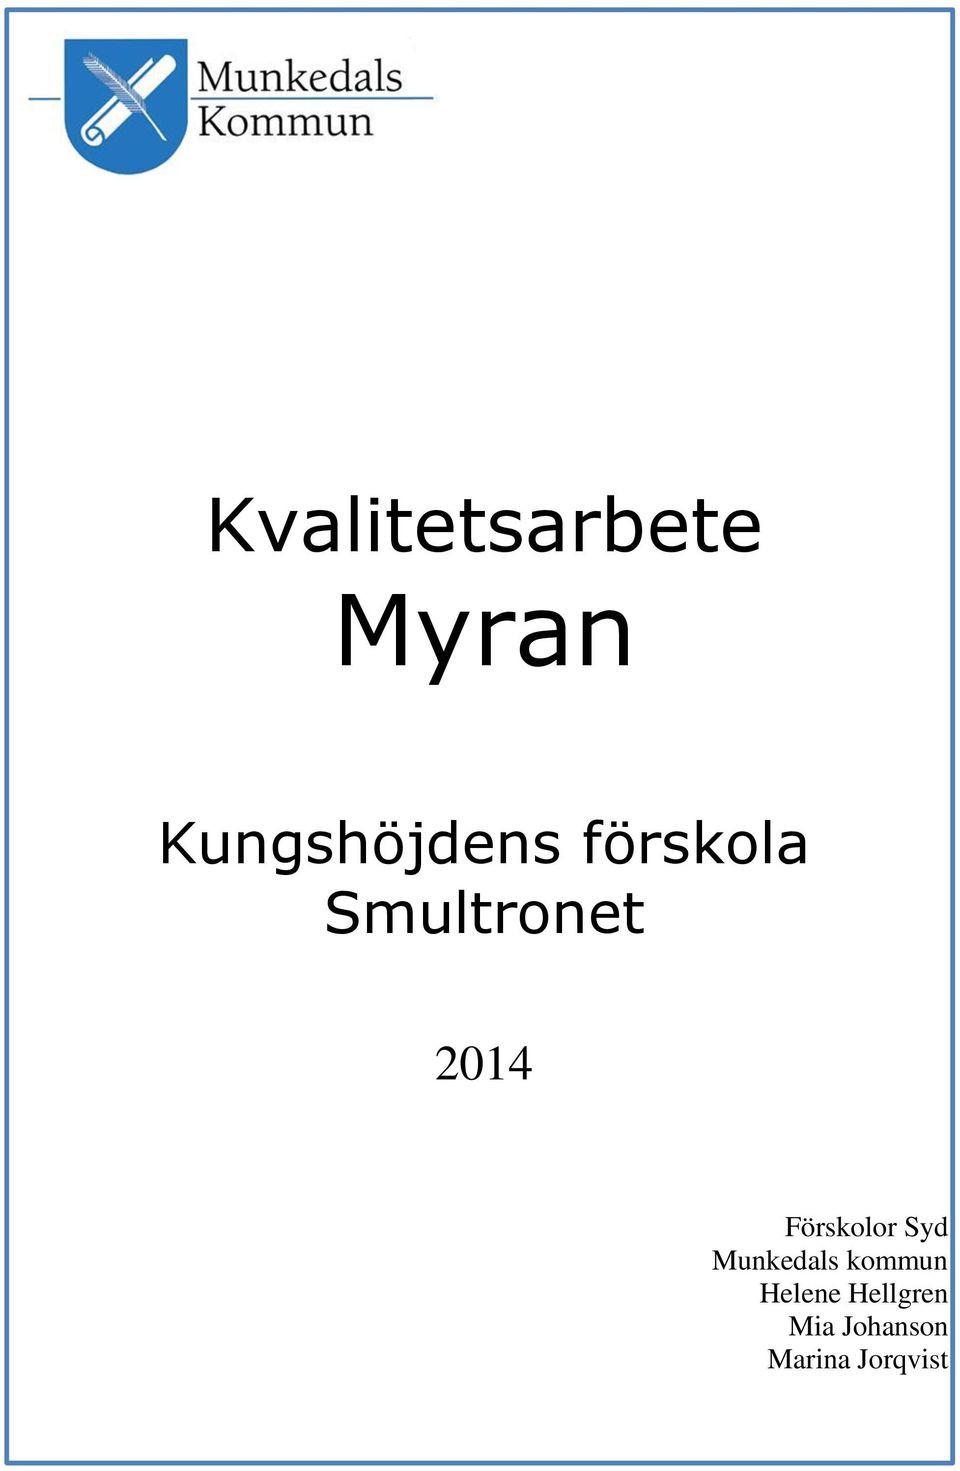 2014 Förskolor Syd Munkedals